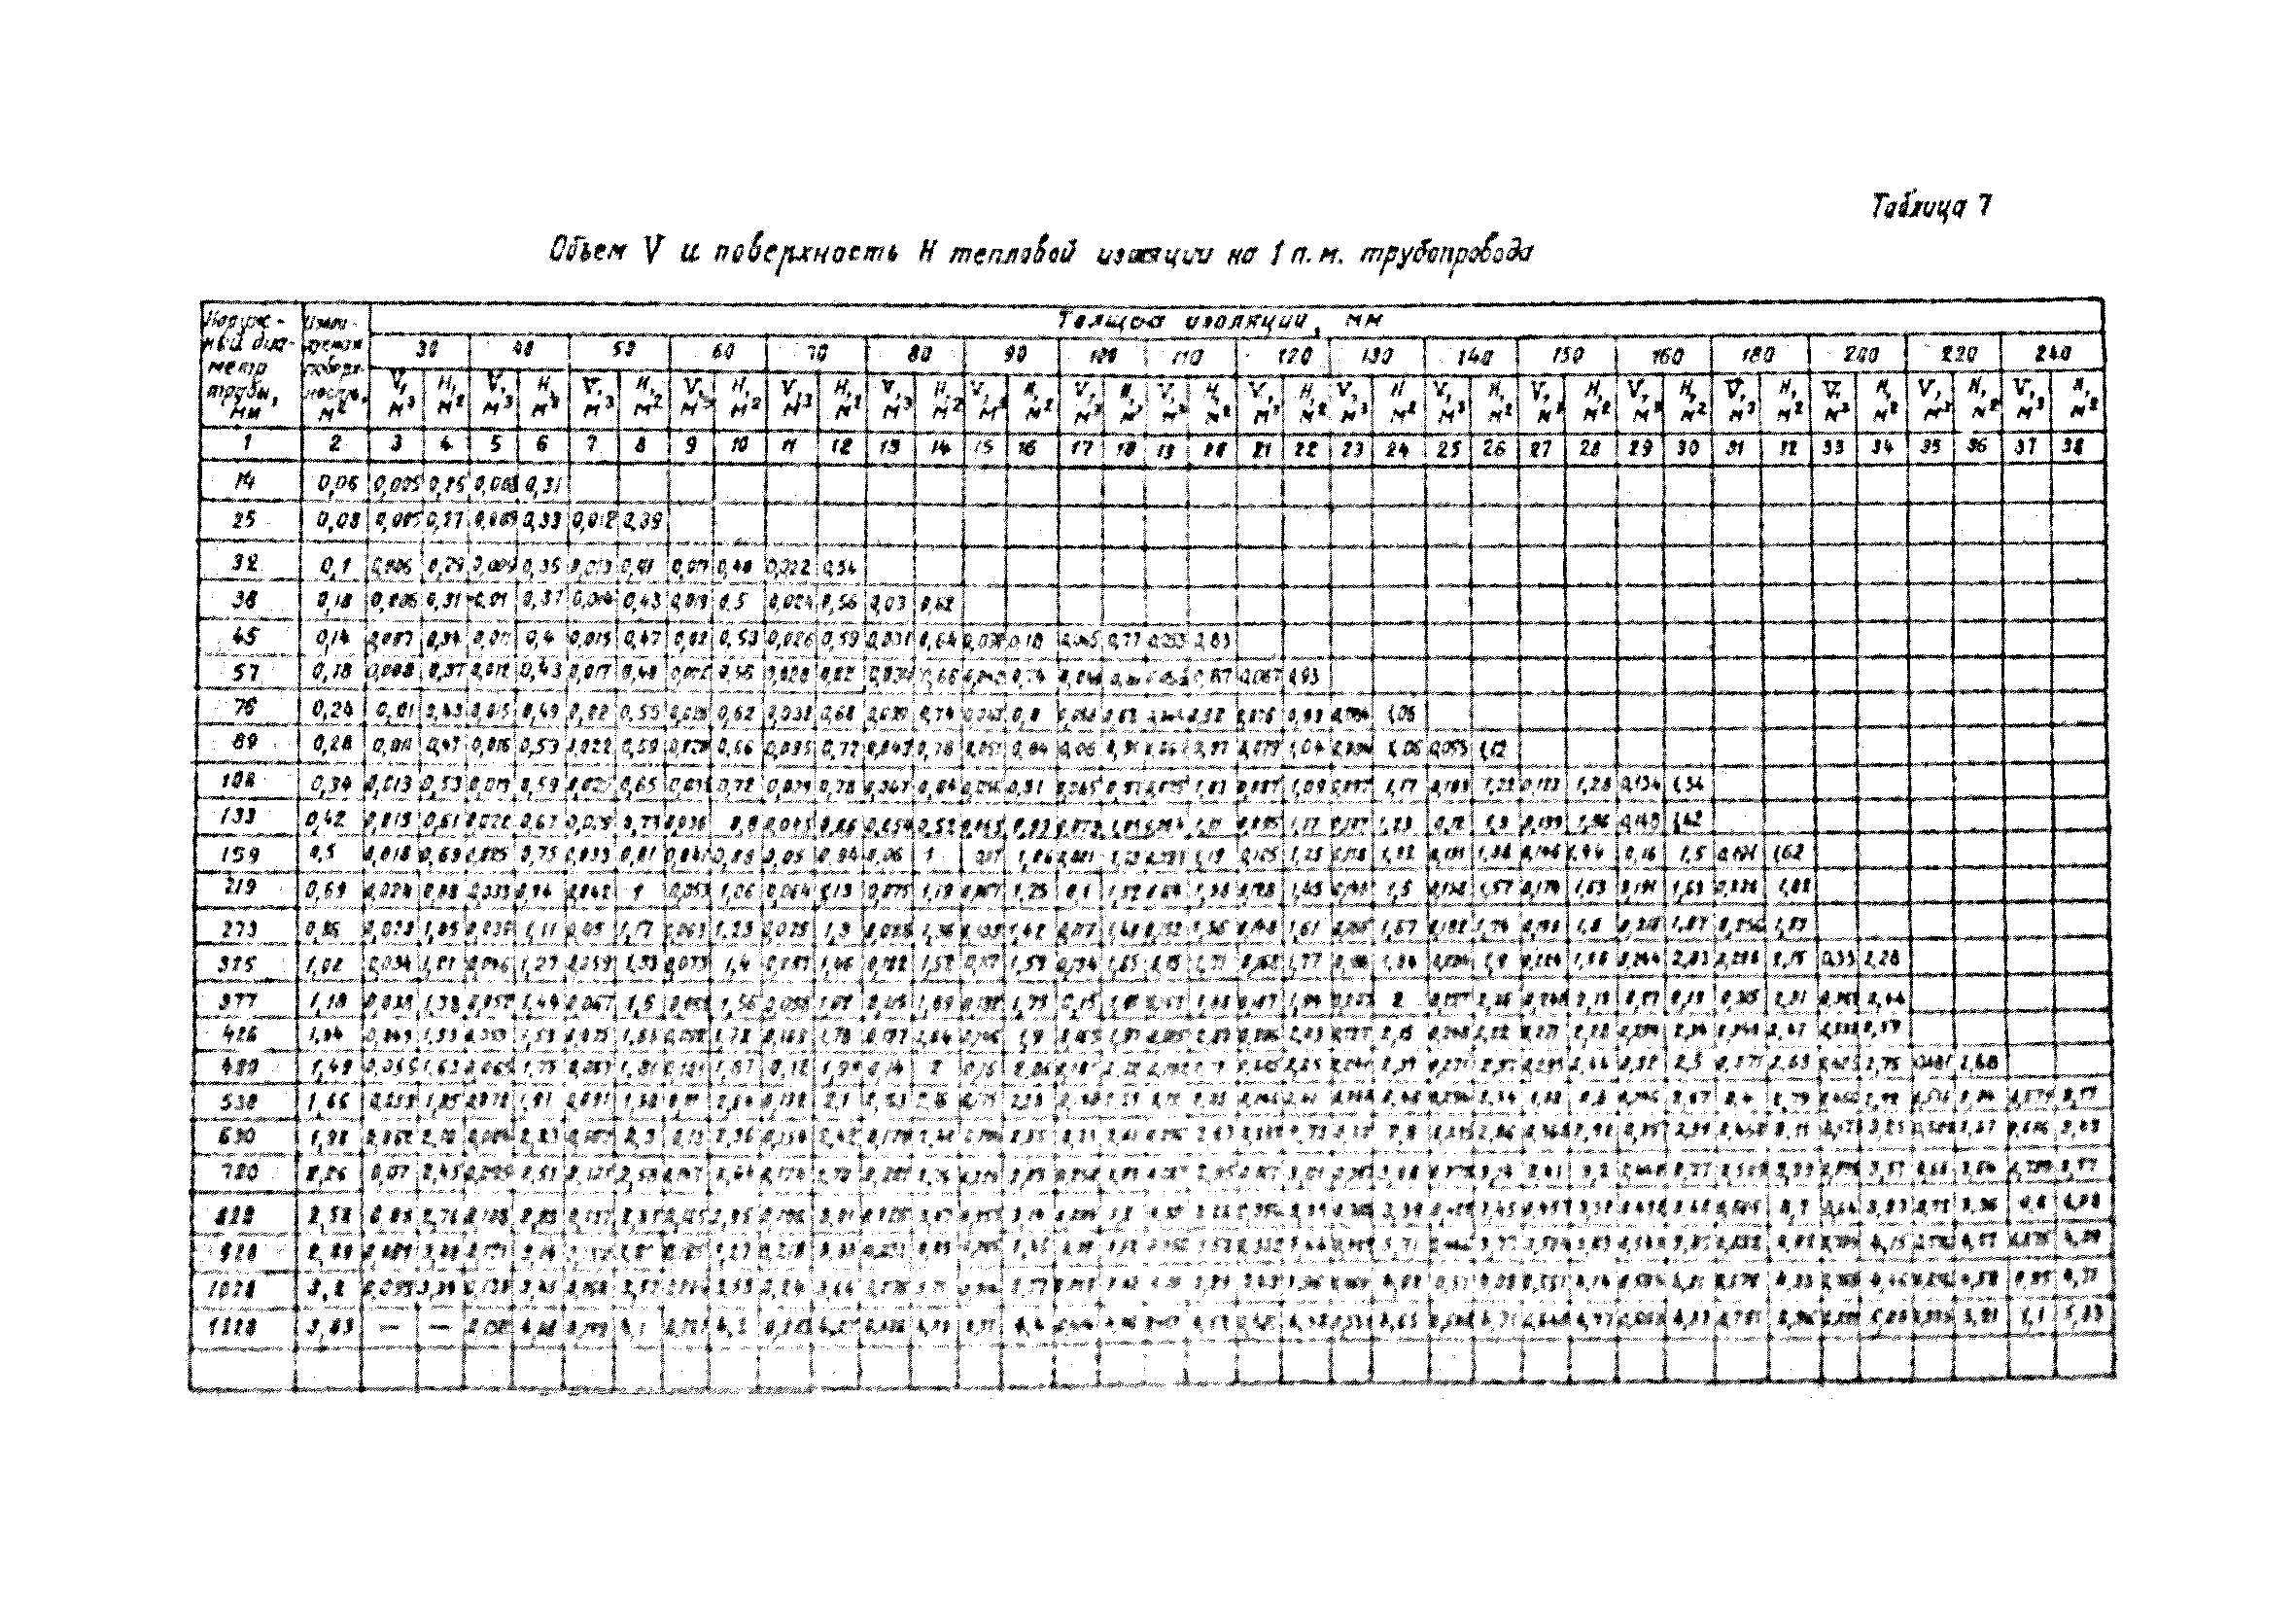 Изоляция в м3 калькулятор. Таблица объема теплоизоляции трубопроводов. Таблица подсчета изоляции трубопровода. Объем изоляции трубопроводов таблица. Таблица объёма тепловой изоляции трубопроводов.